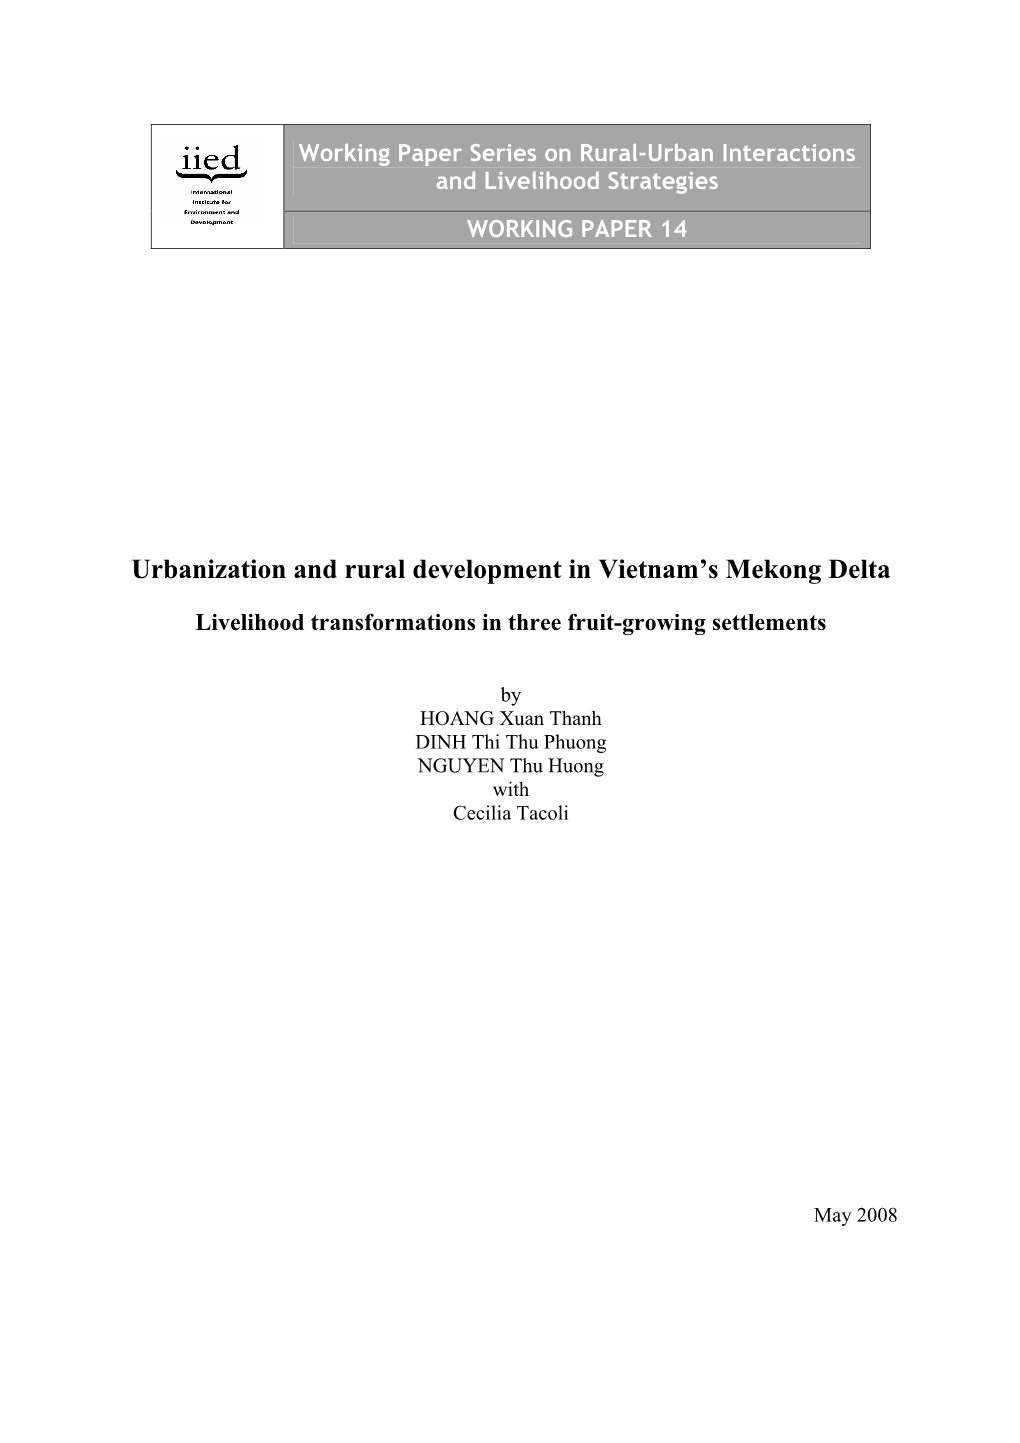 Urbanization and Rural Development in Vietnam's Mekong Delta